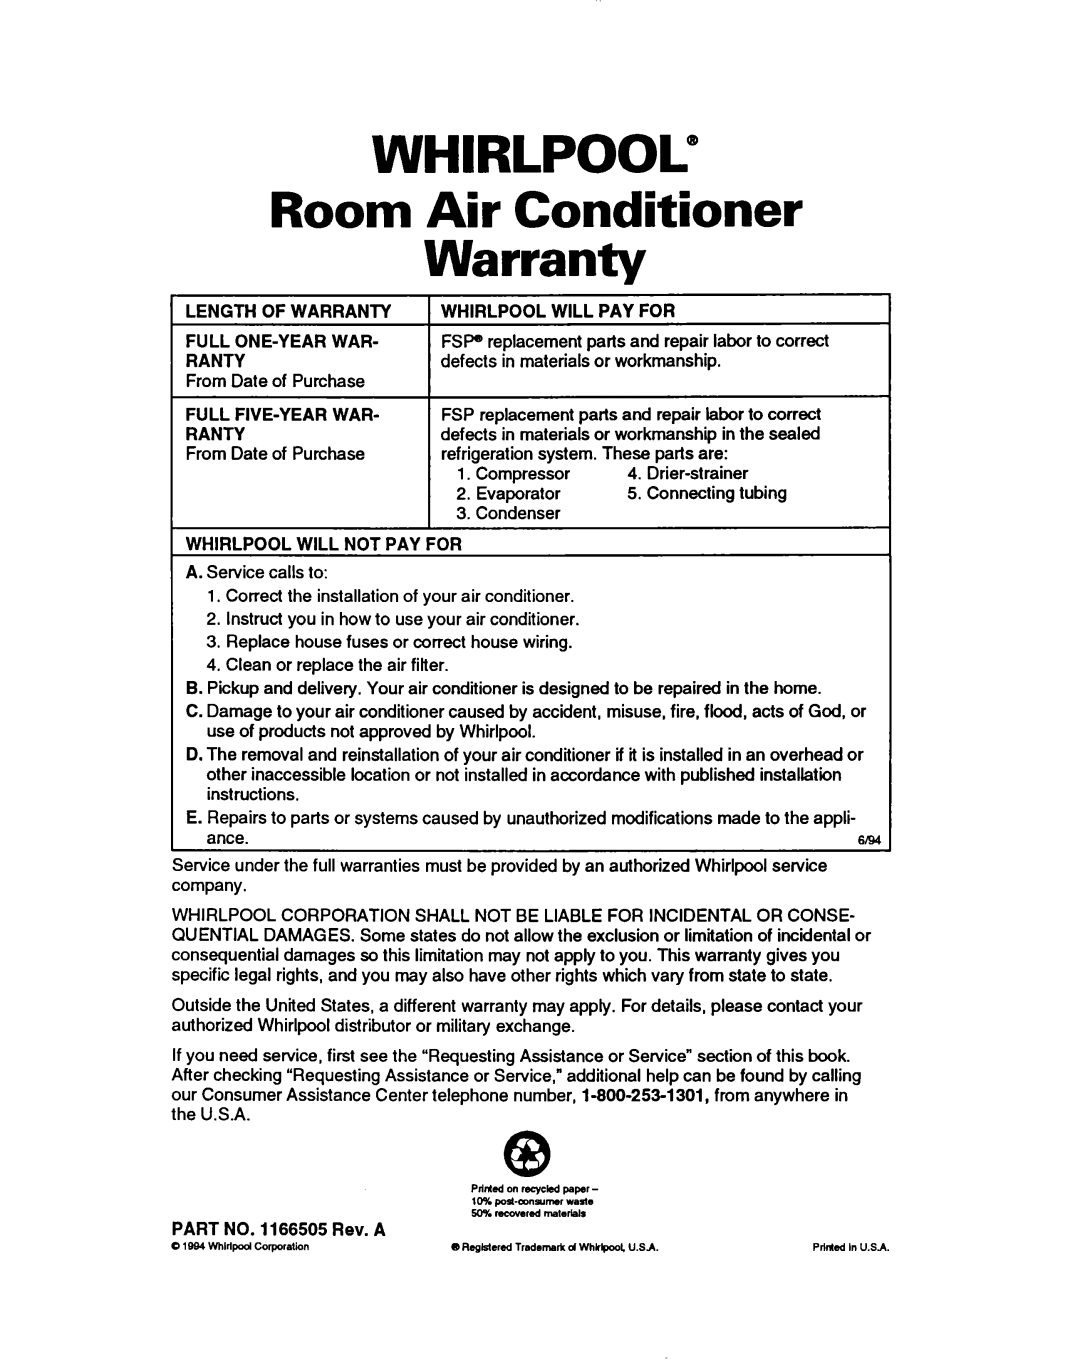 Whirlpool ACE184XD0 warranty Whirlpool@’, Room Air Conditioner Warranty 